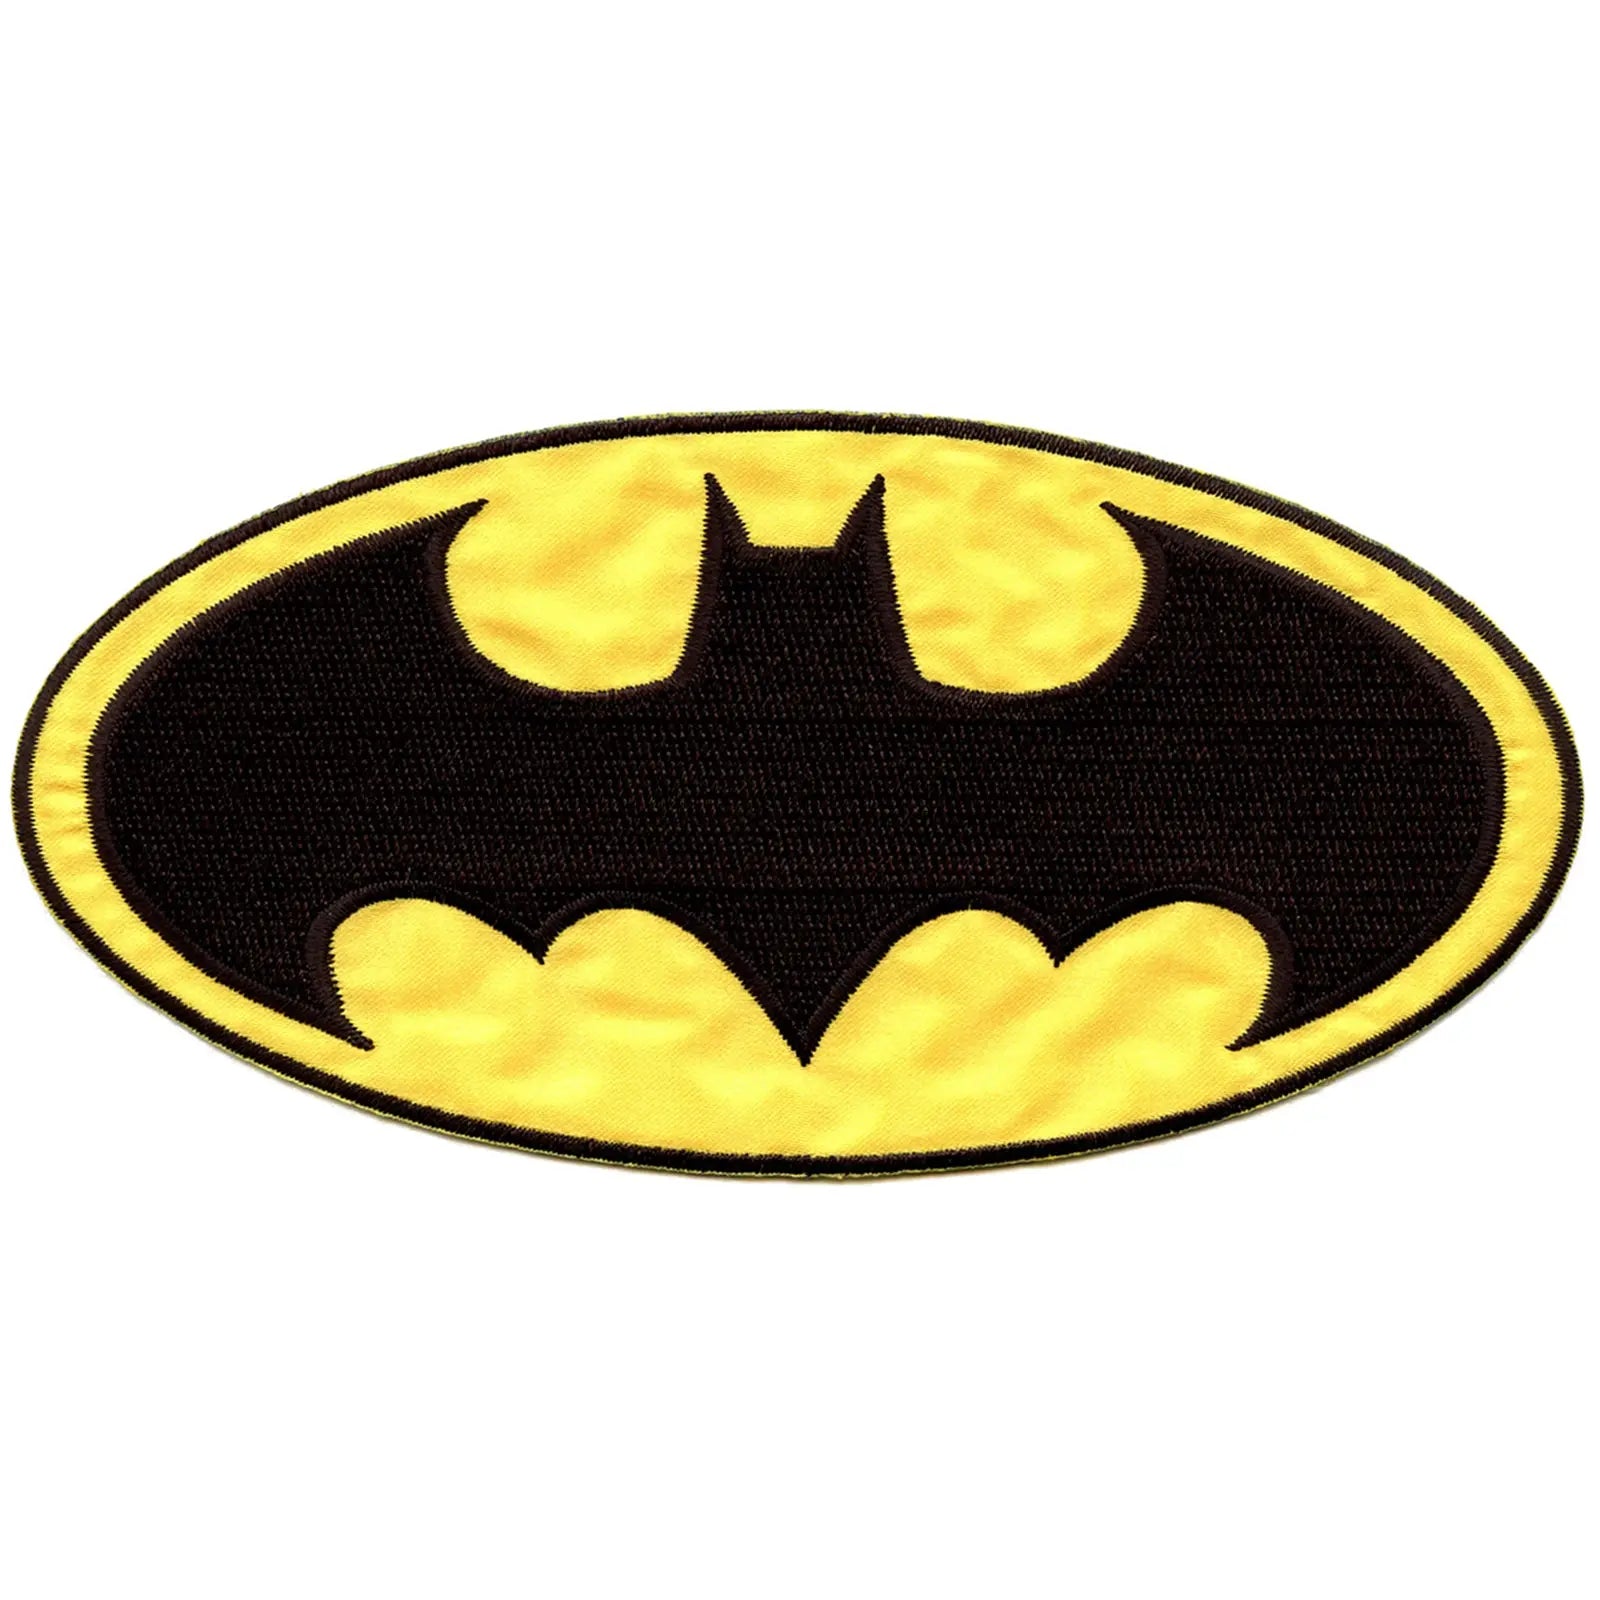 Dc Comics Batman Logo Iron on Embroidered Applique Patch - Large 